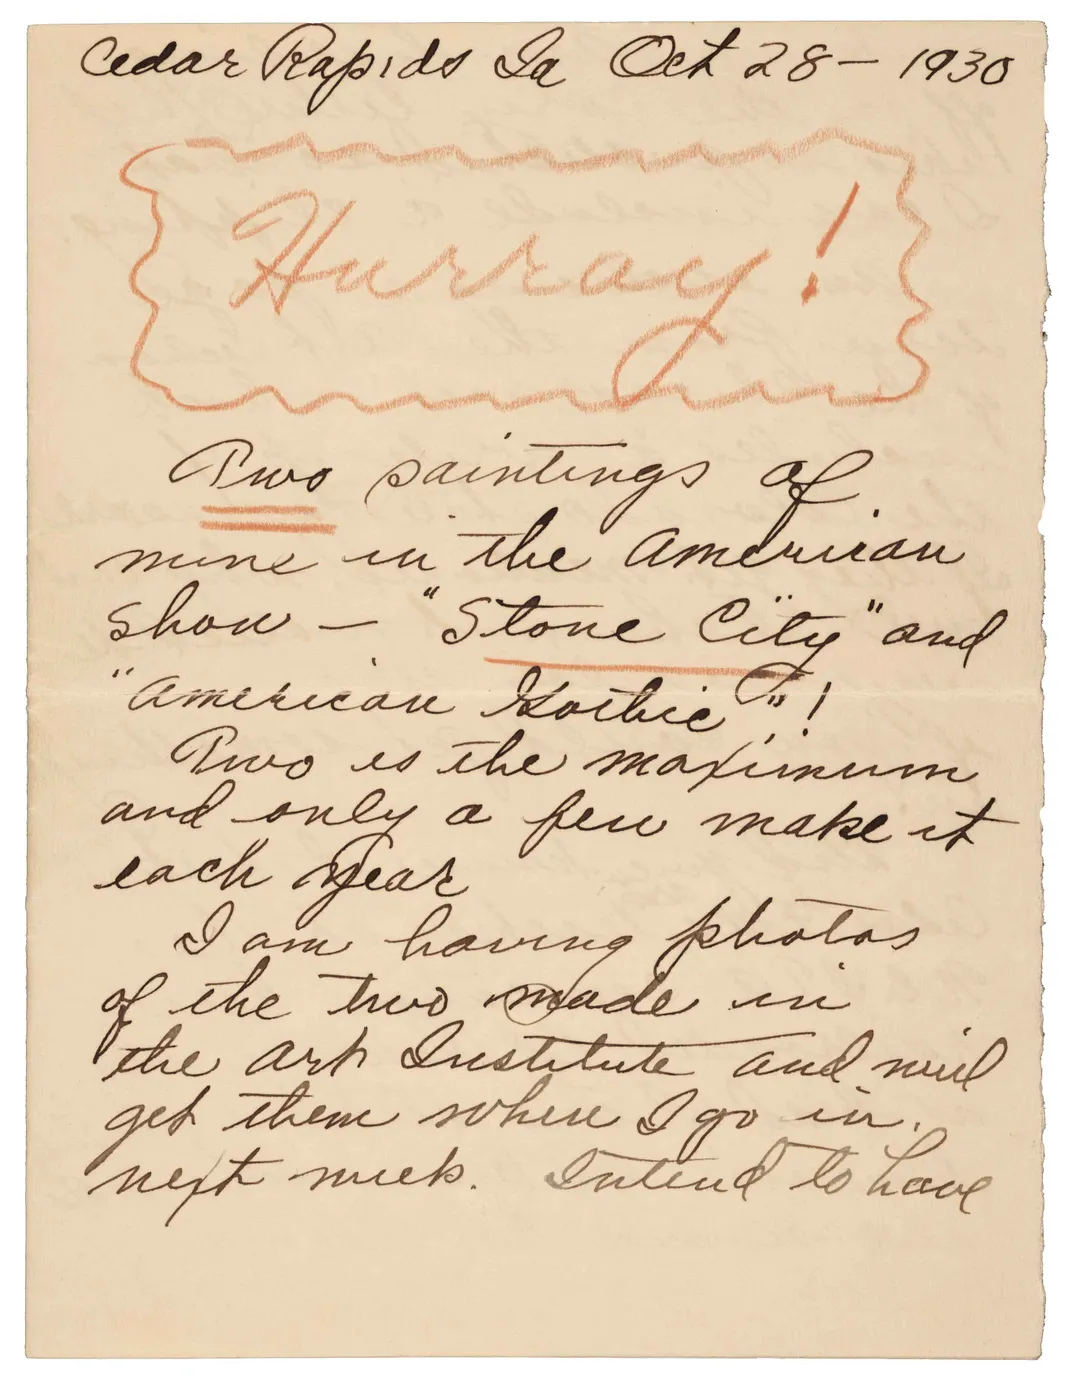 Grant Wood Letter, 1930